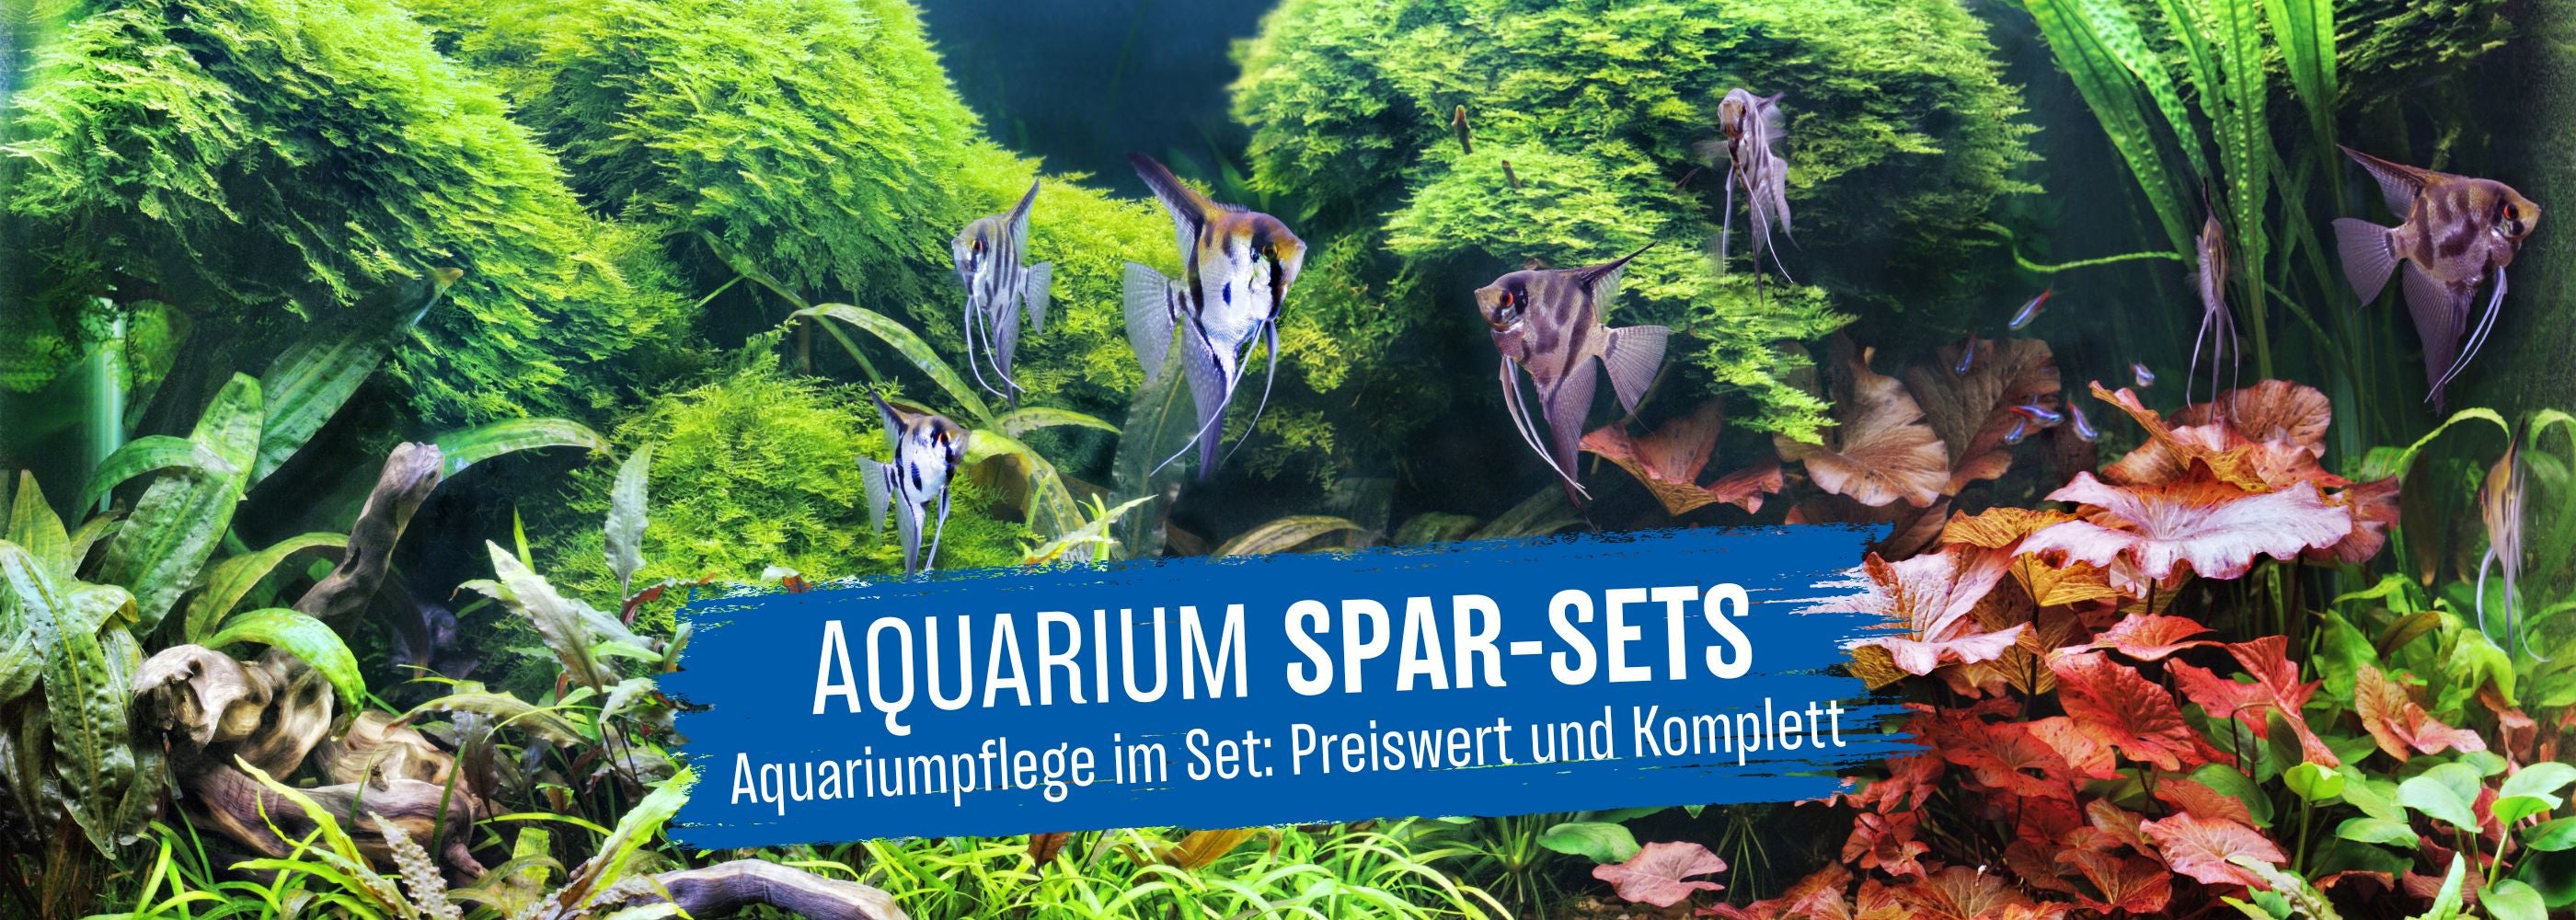 Aquasan Kategoriebild Aquarium Sparsets Desktop